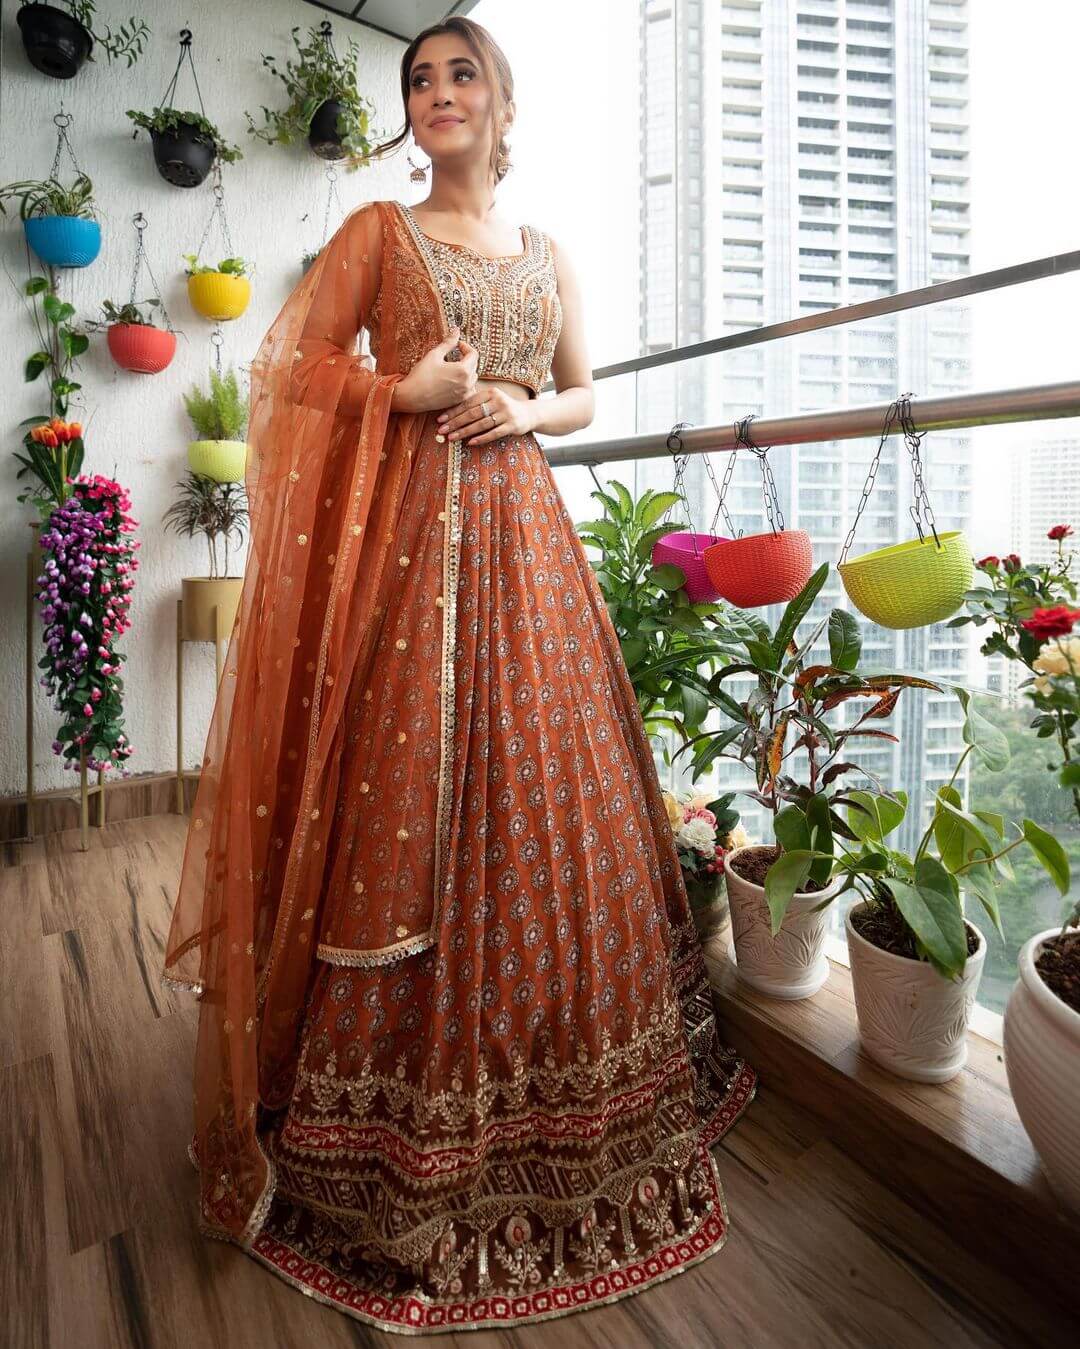 Shivangi Joshi In Orange Lehenga Outfit